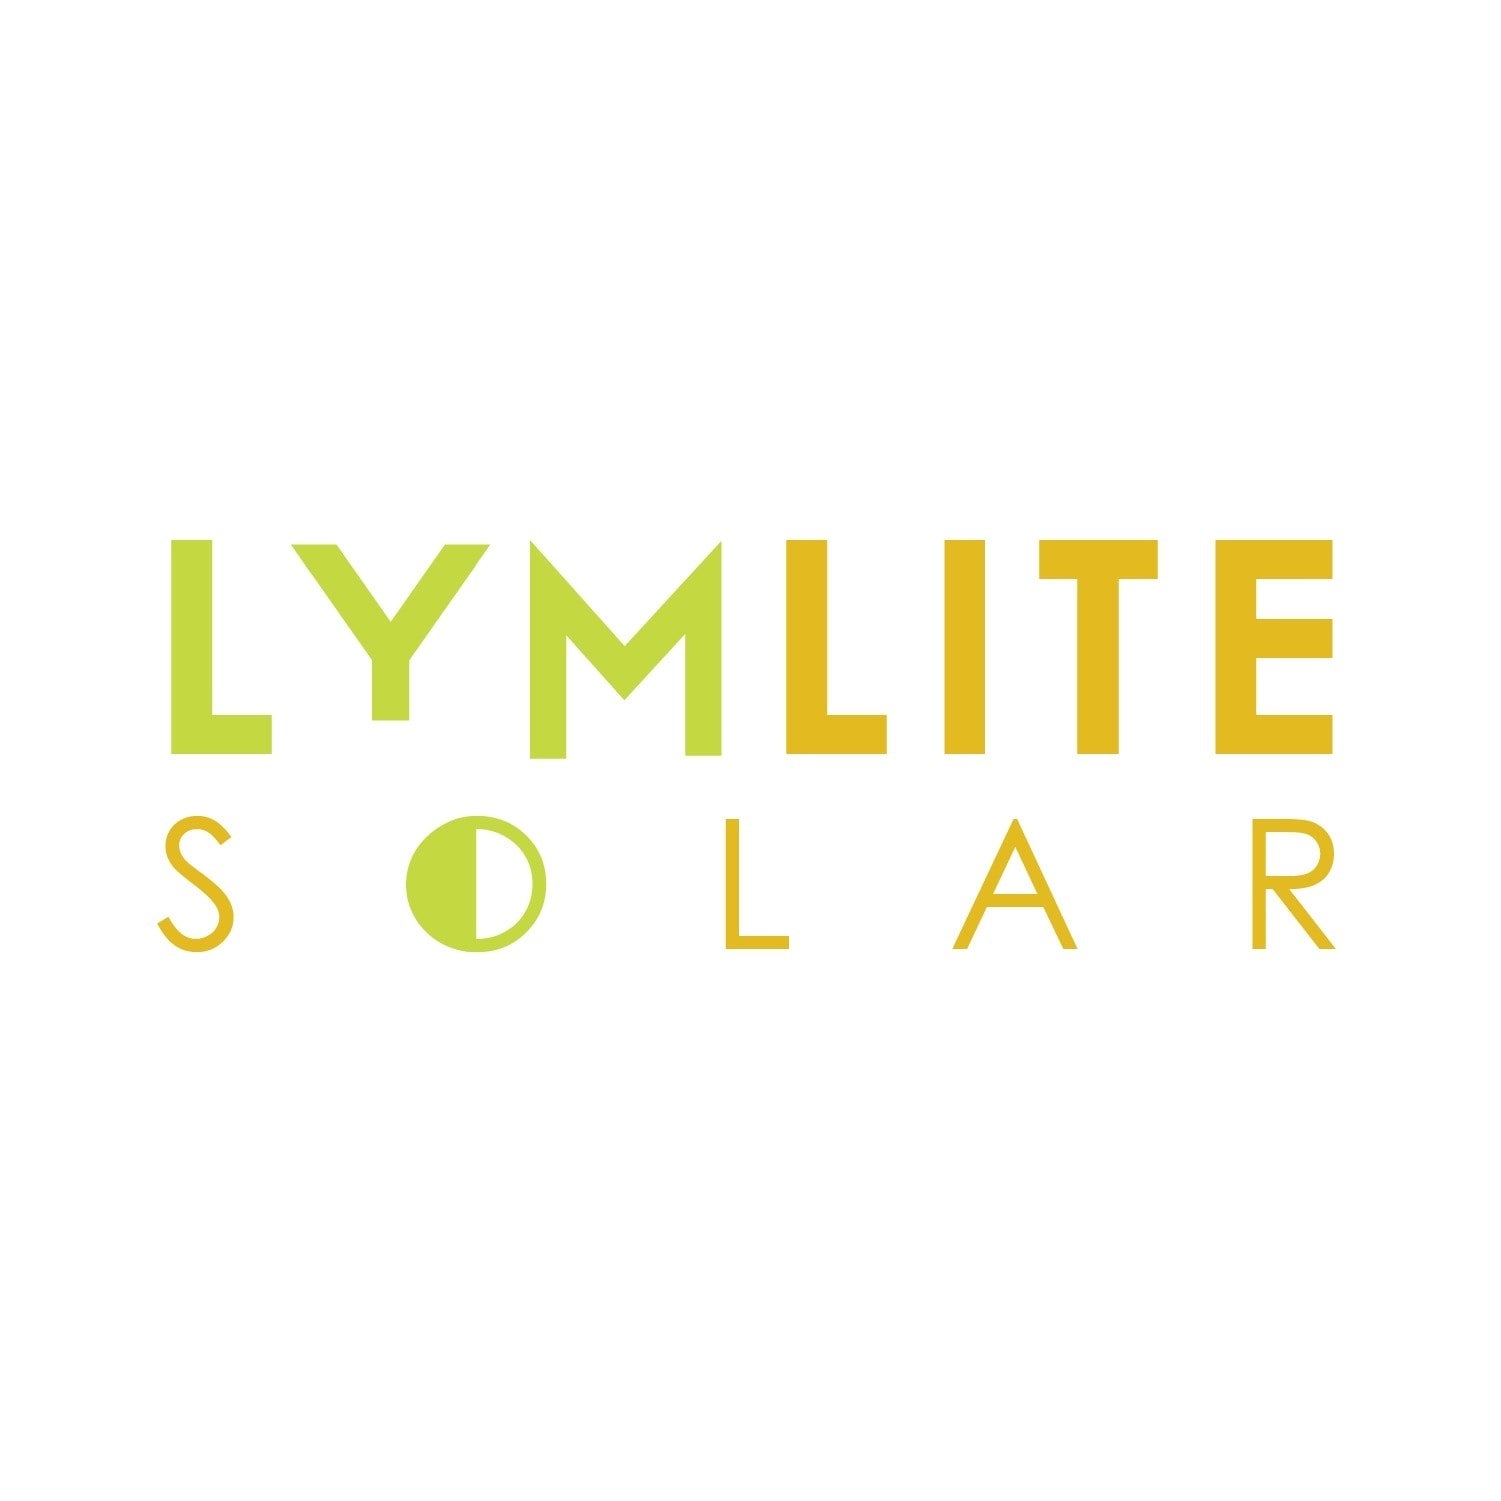 LymLite Solar logo